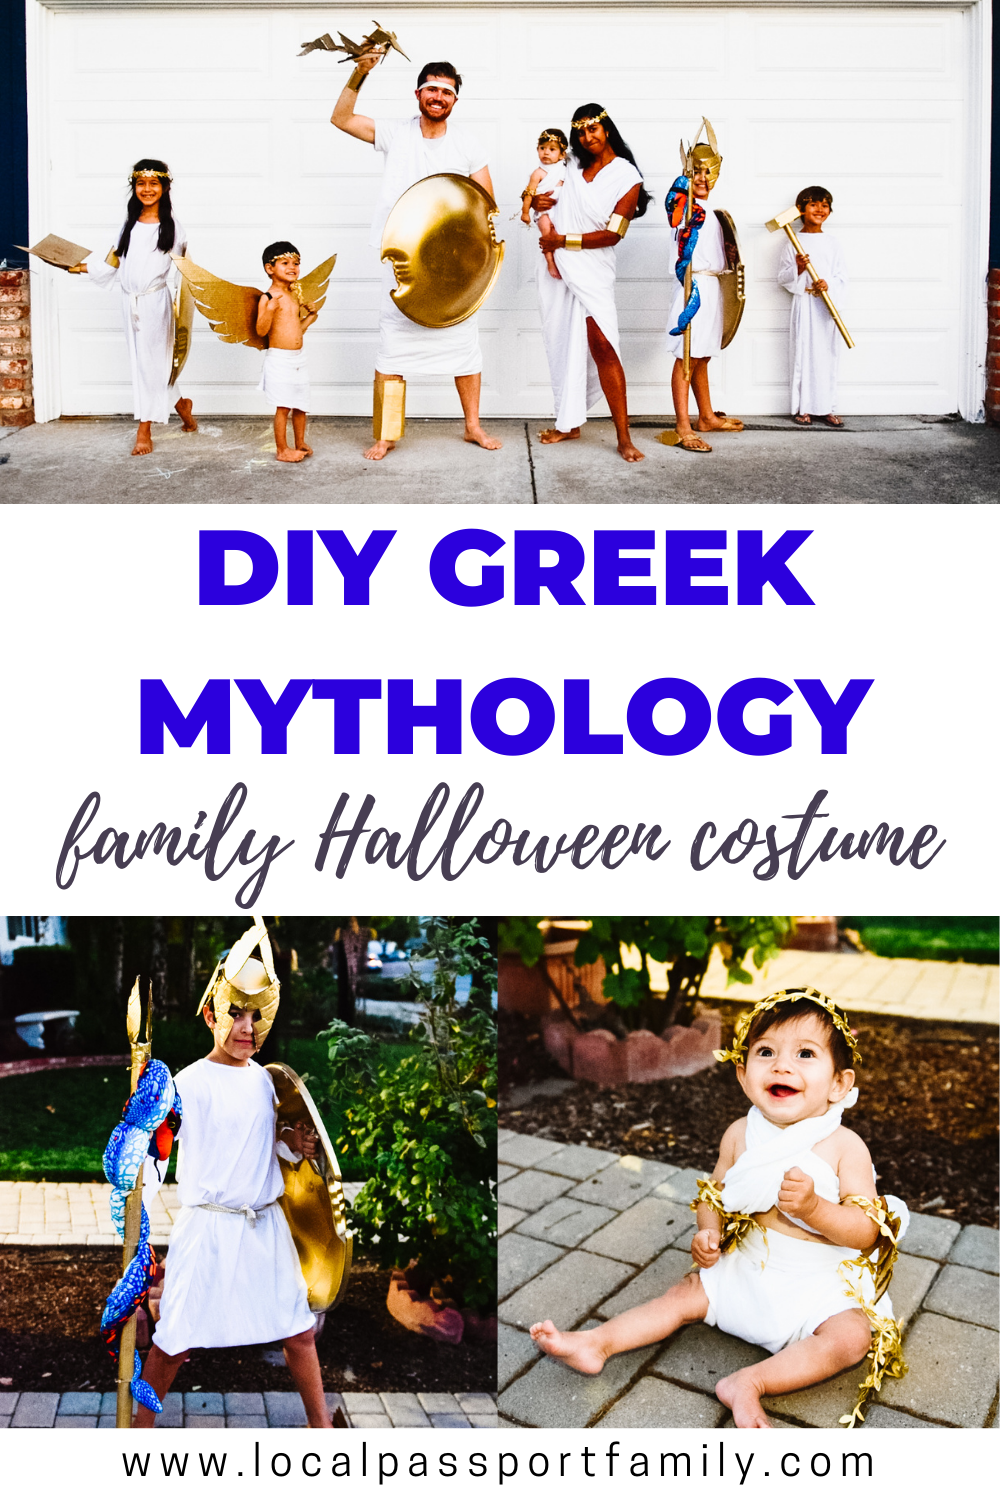 Family Greek Mythology Costume for Halloween